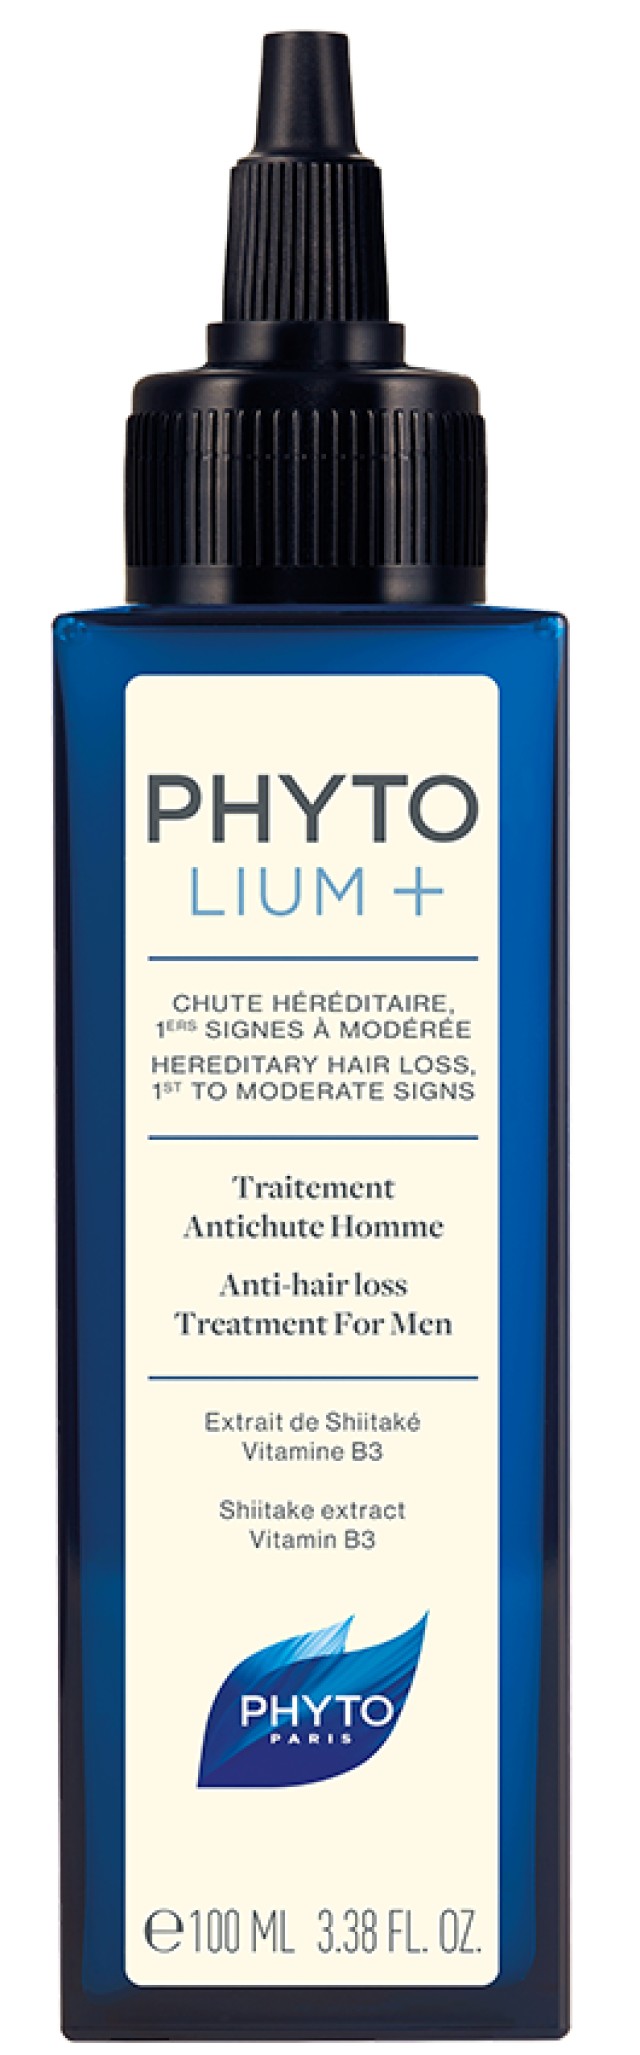 Phyto Phytolium+ Anti-hair loss Treatment For Men 100ml